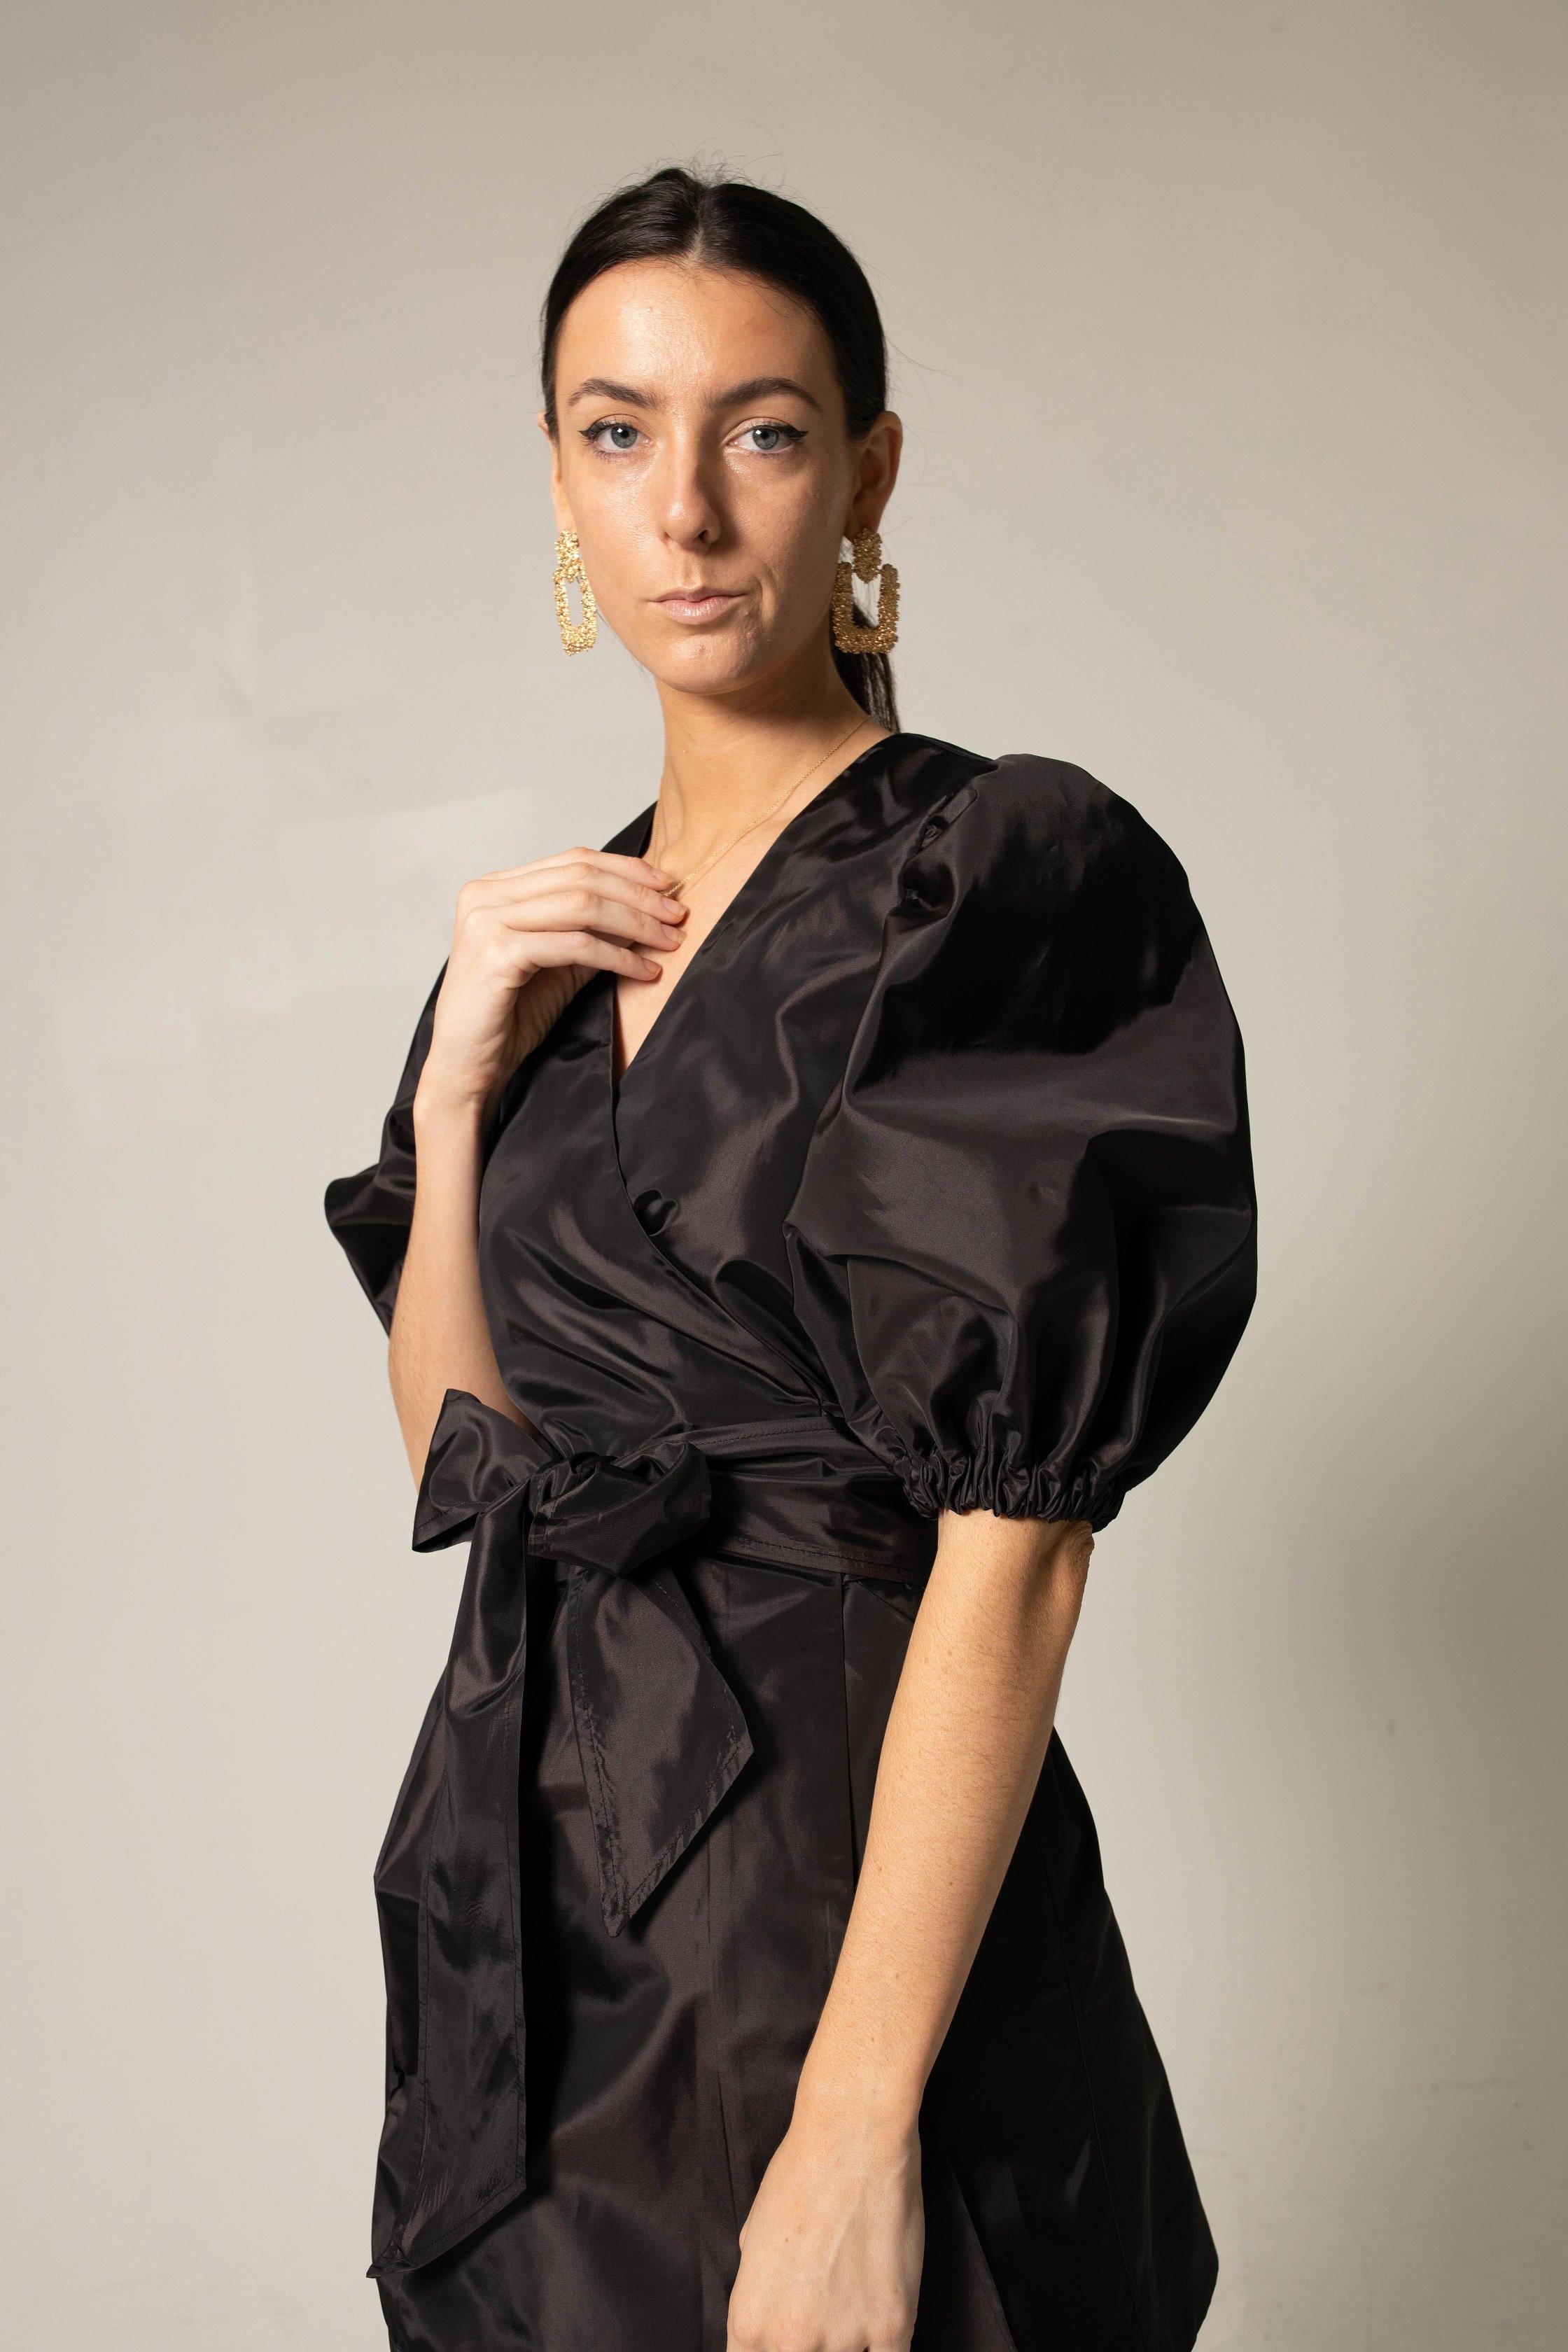 Embrace Confidence with the Black Lusso Wrap Dress by Le Réussi